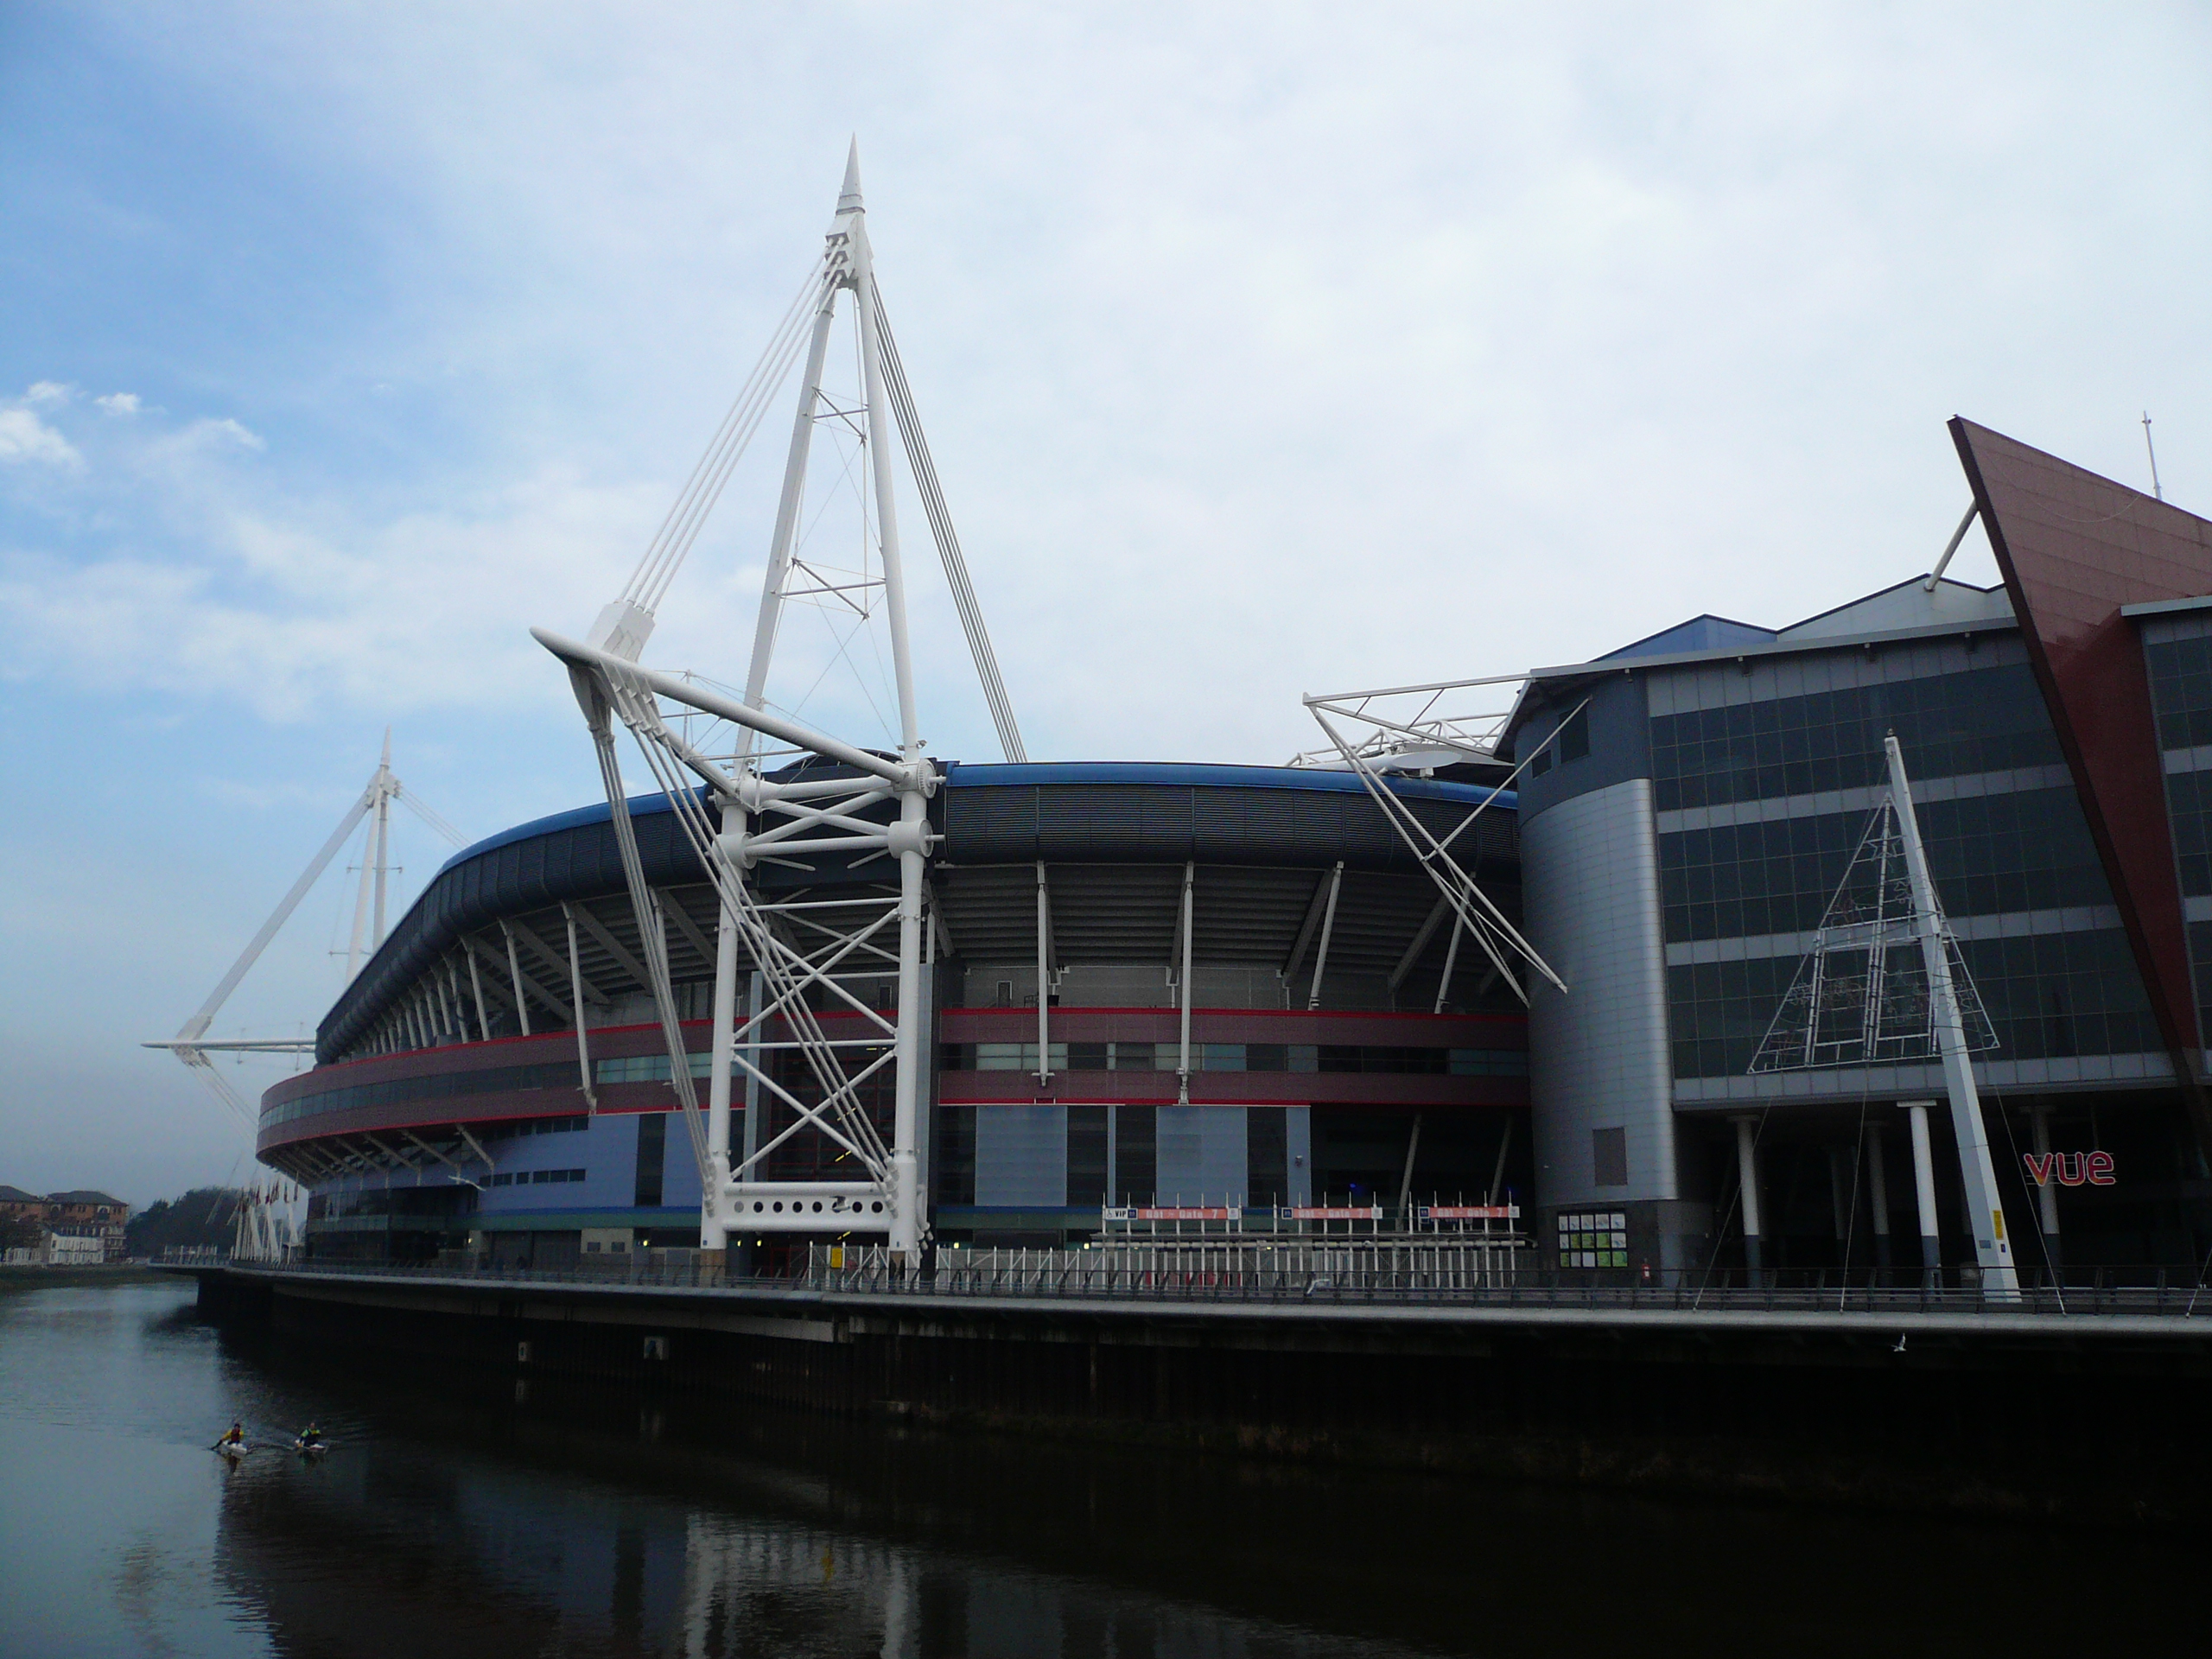 Cardiff City Stadium - Wikipedia